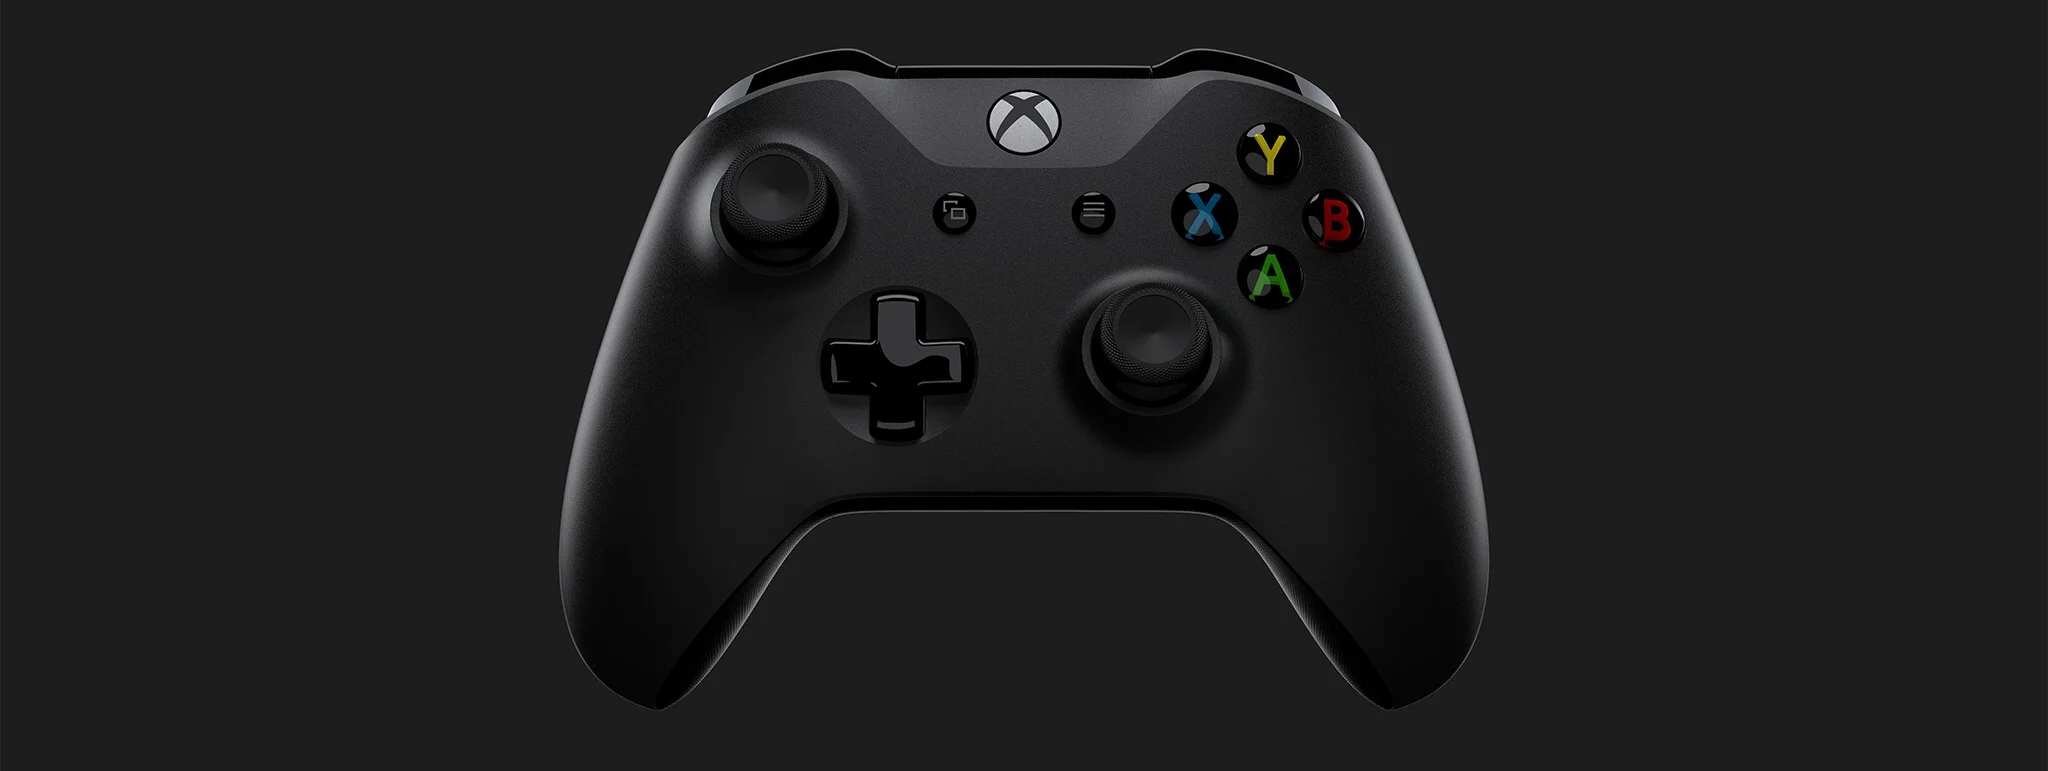 5 веских причин приобрести Xbox One X - фото 3